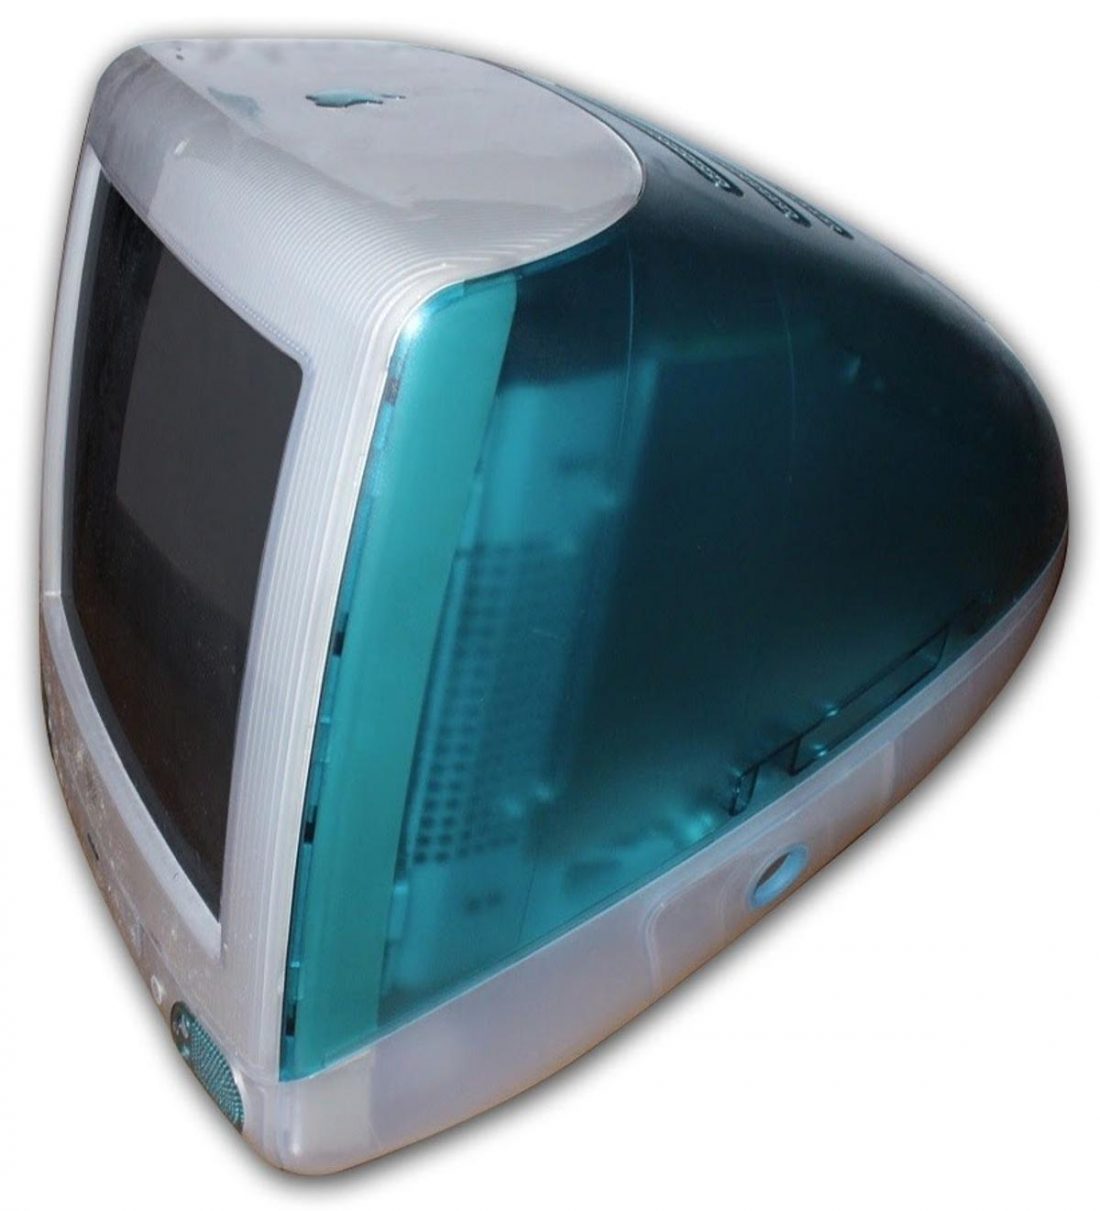 Apple iMac, alrededor de 1998 (De: Wikipedia)